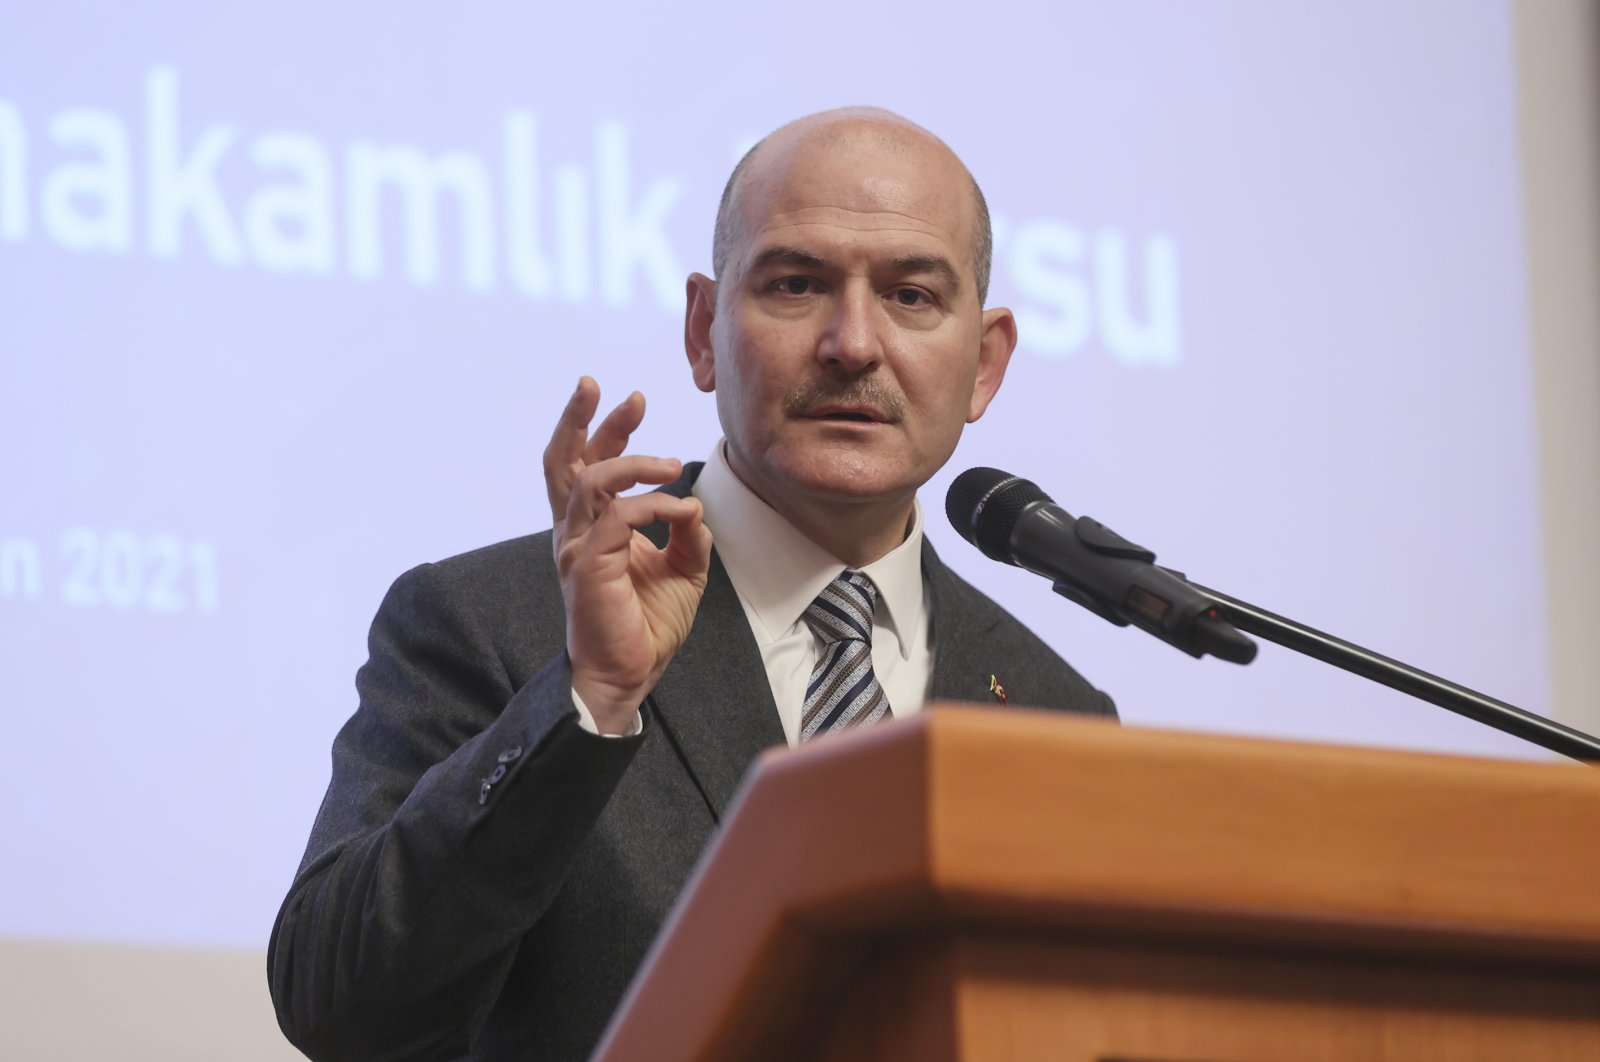 Interior Minister Süleyman Soylu speaks at a event in the capital Ankara, Turkey, Feb. 19, 2021. (AA Photo)